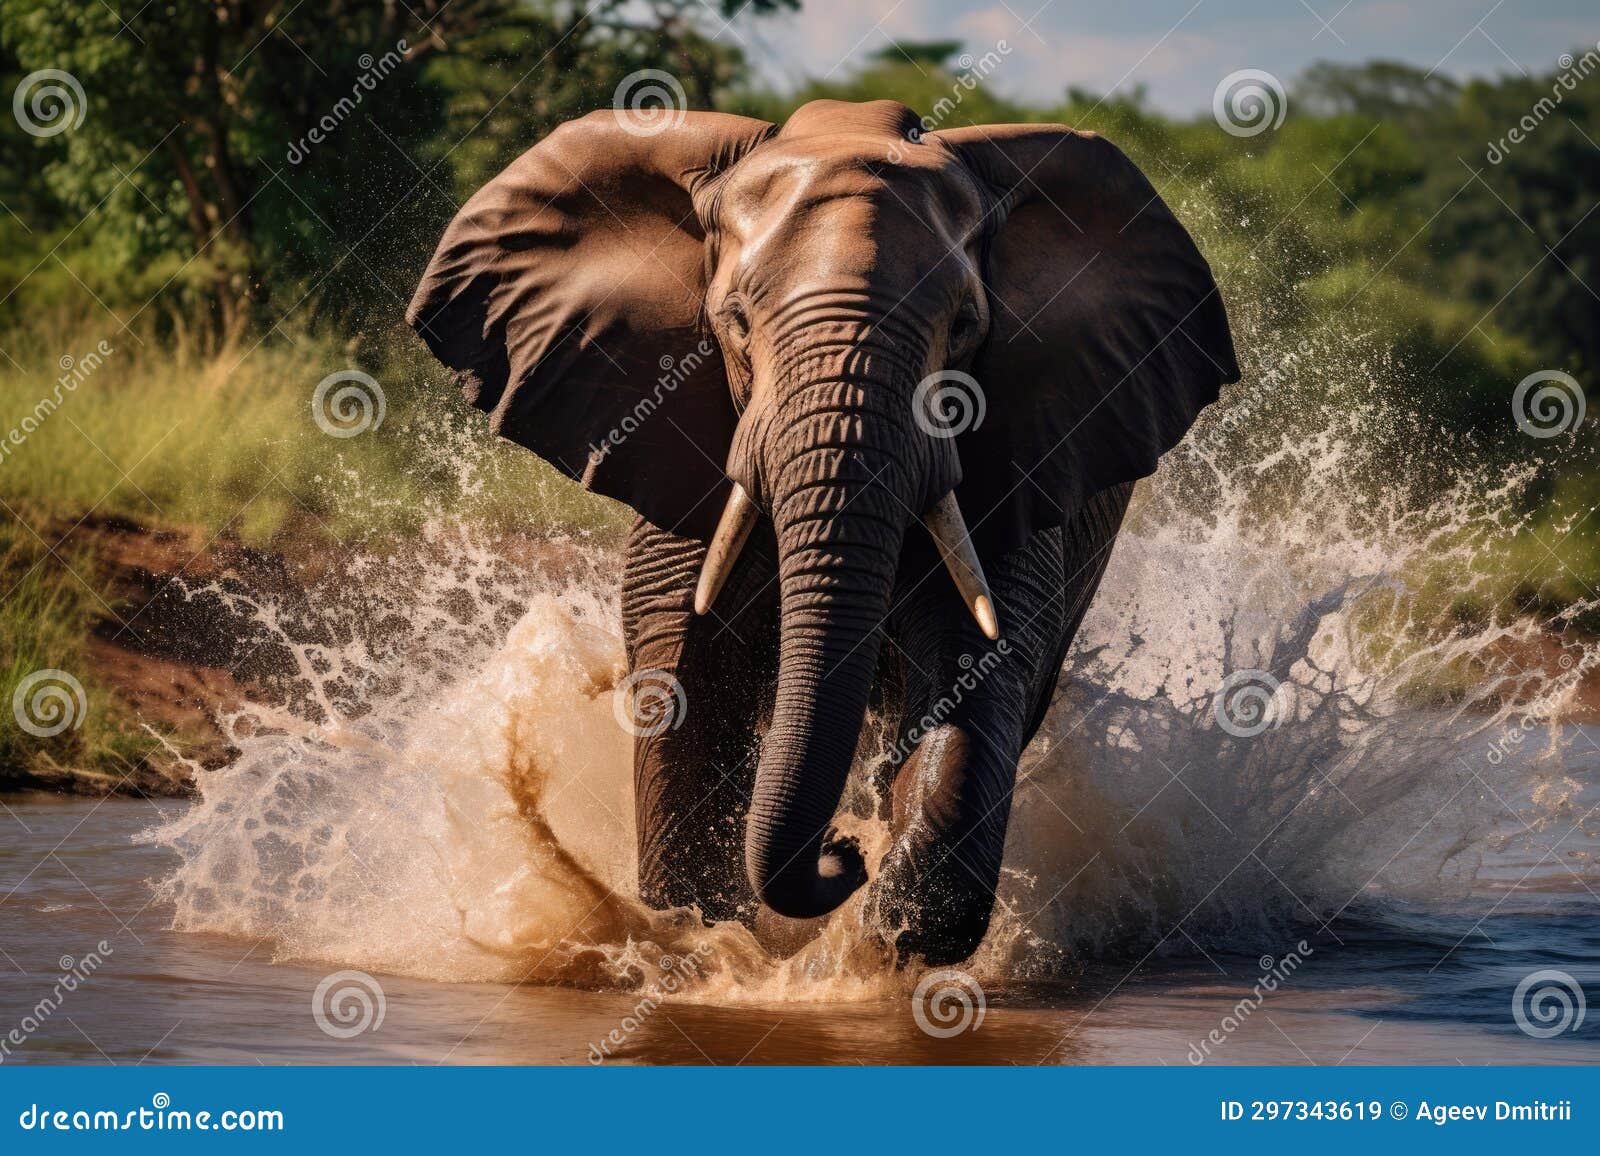 elephant trunk wild large wildlife mammal pachyderm nature outdoors safari animal river